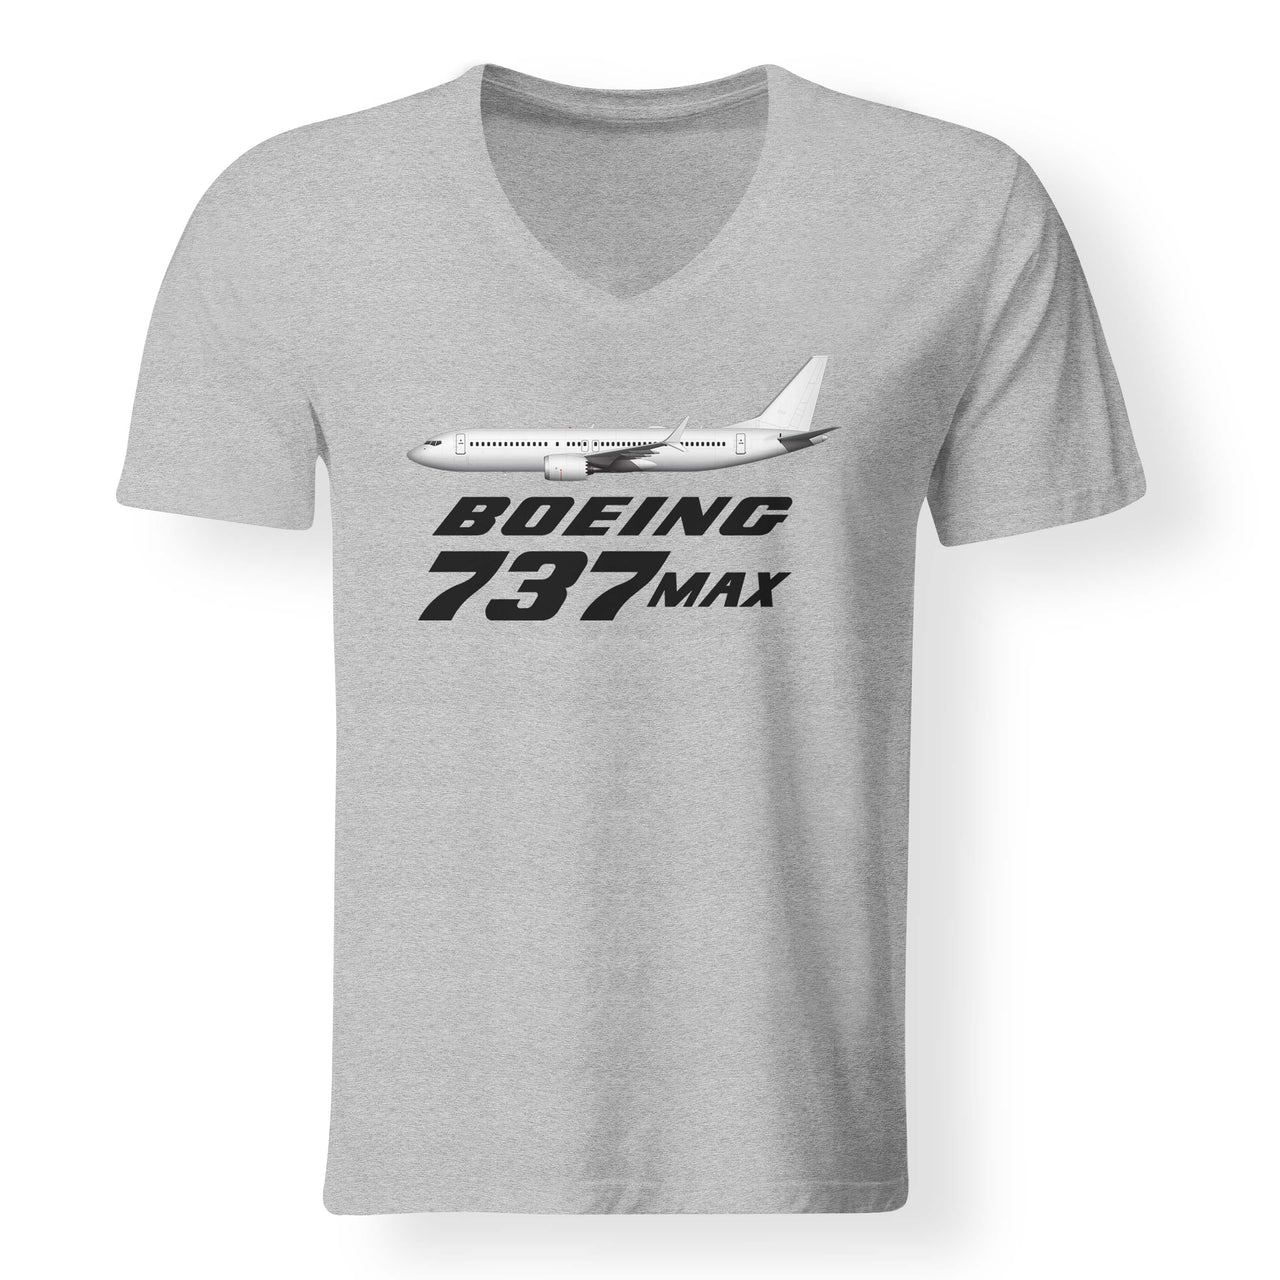 The Boeing 737Max Designed V-Neck T-Shirts